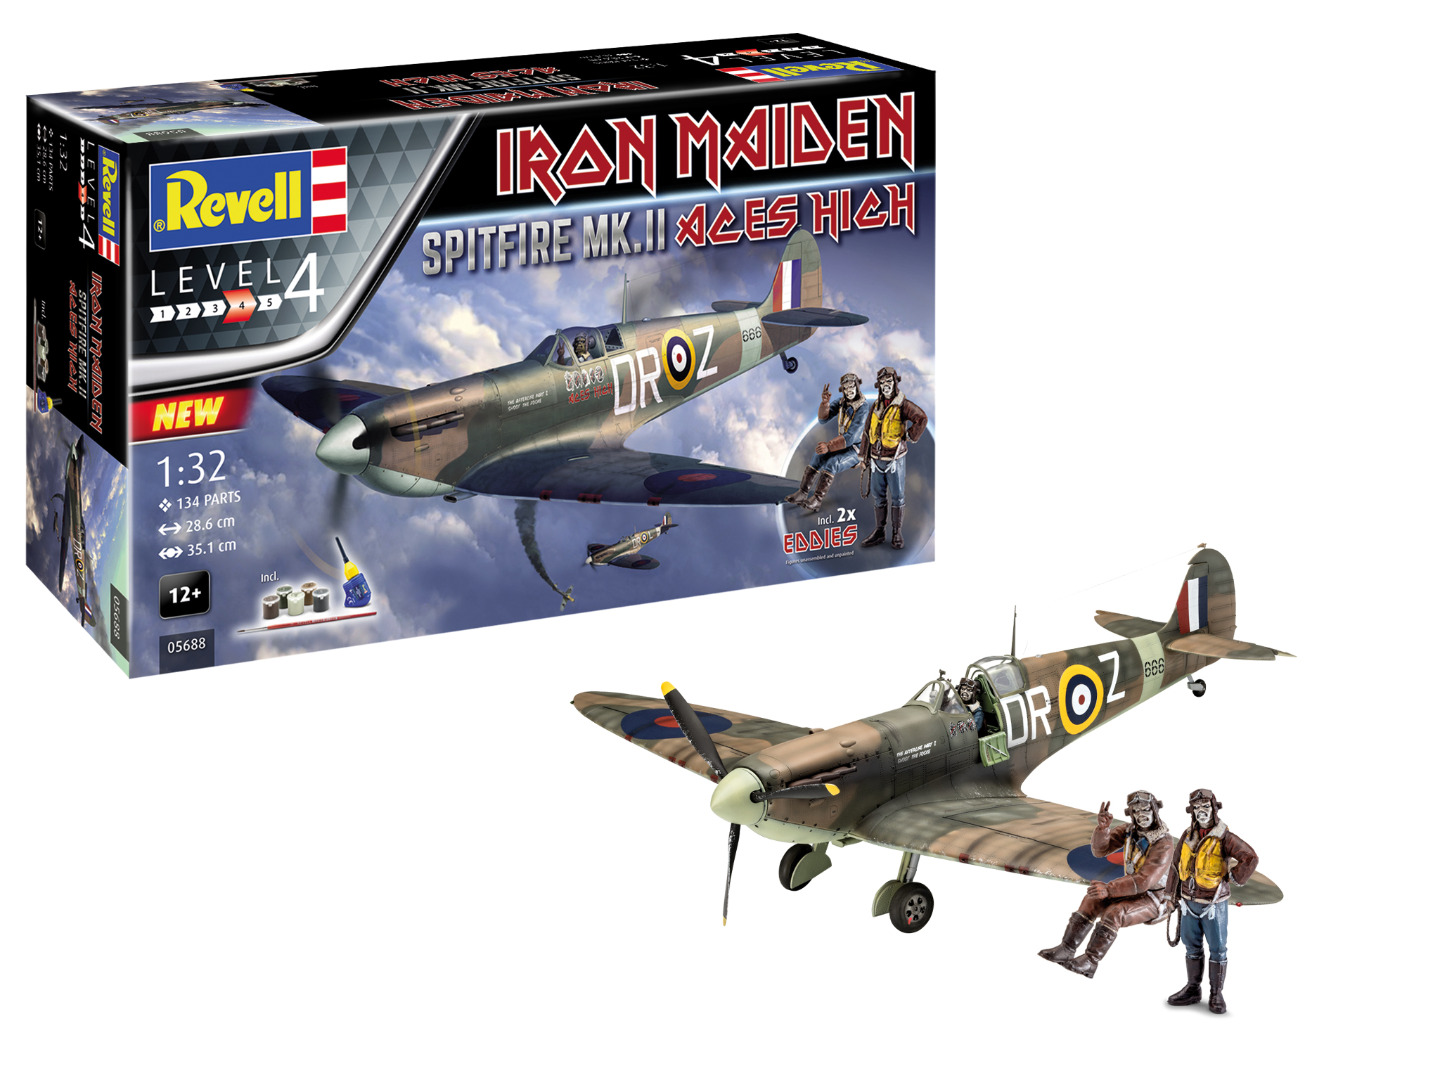 Revell Model Set Spitfire Mk.II Aces High Iron Maiden 1:32